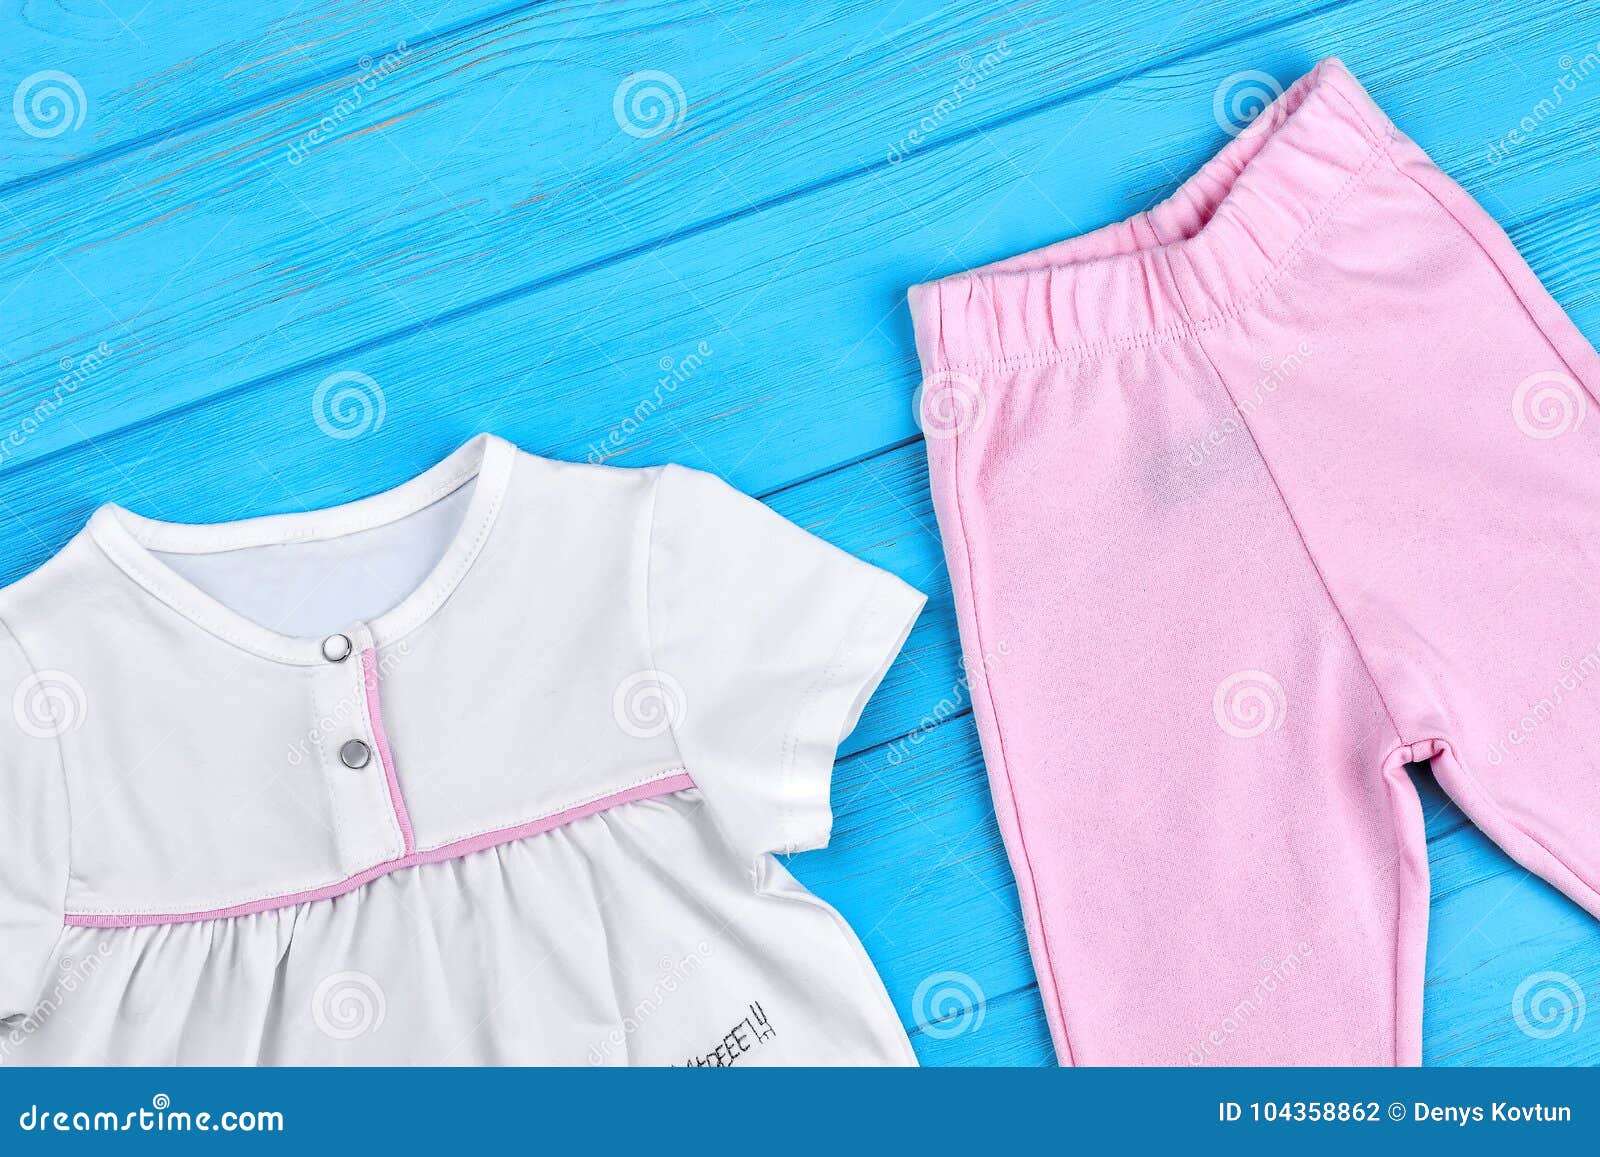 Little Princess Summer Cotton Suit. Stock Photo - Image of background ...